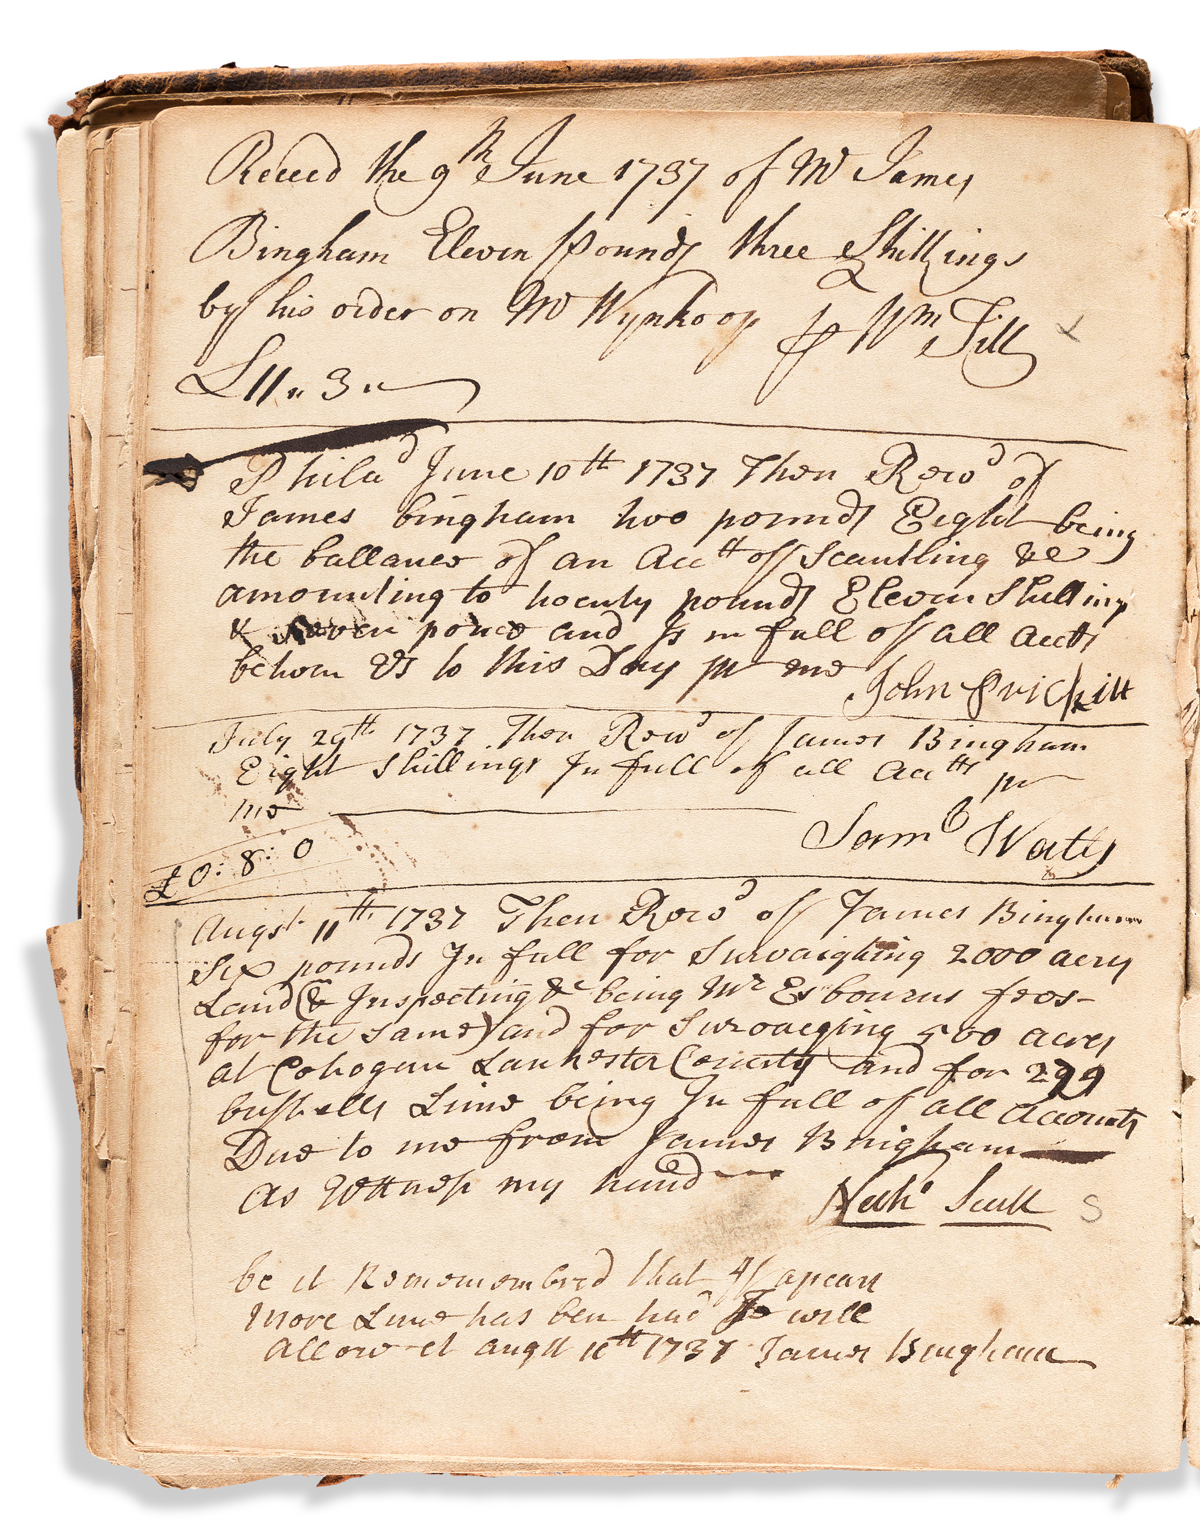 (PENNSYLVANIA.) Receipt and memorandum book kept by early Philadelphia tradesman James Bingham.